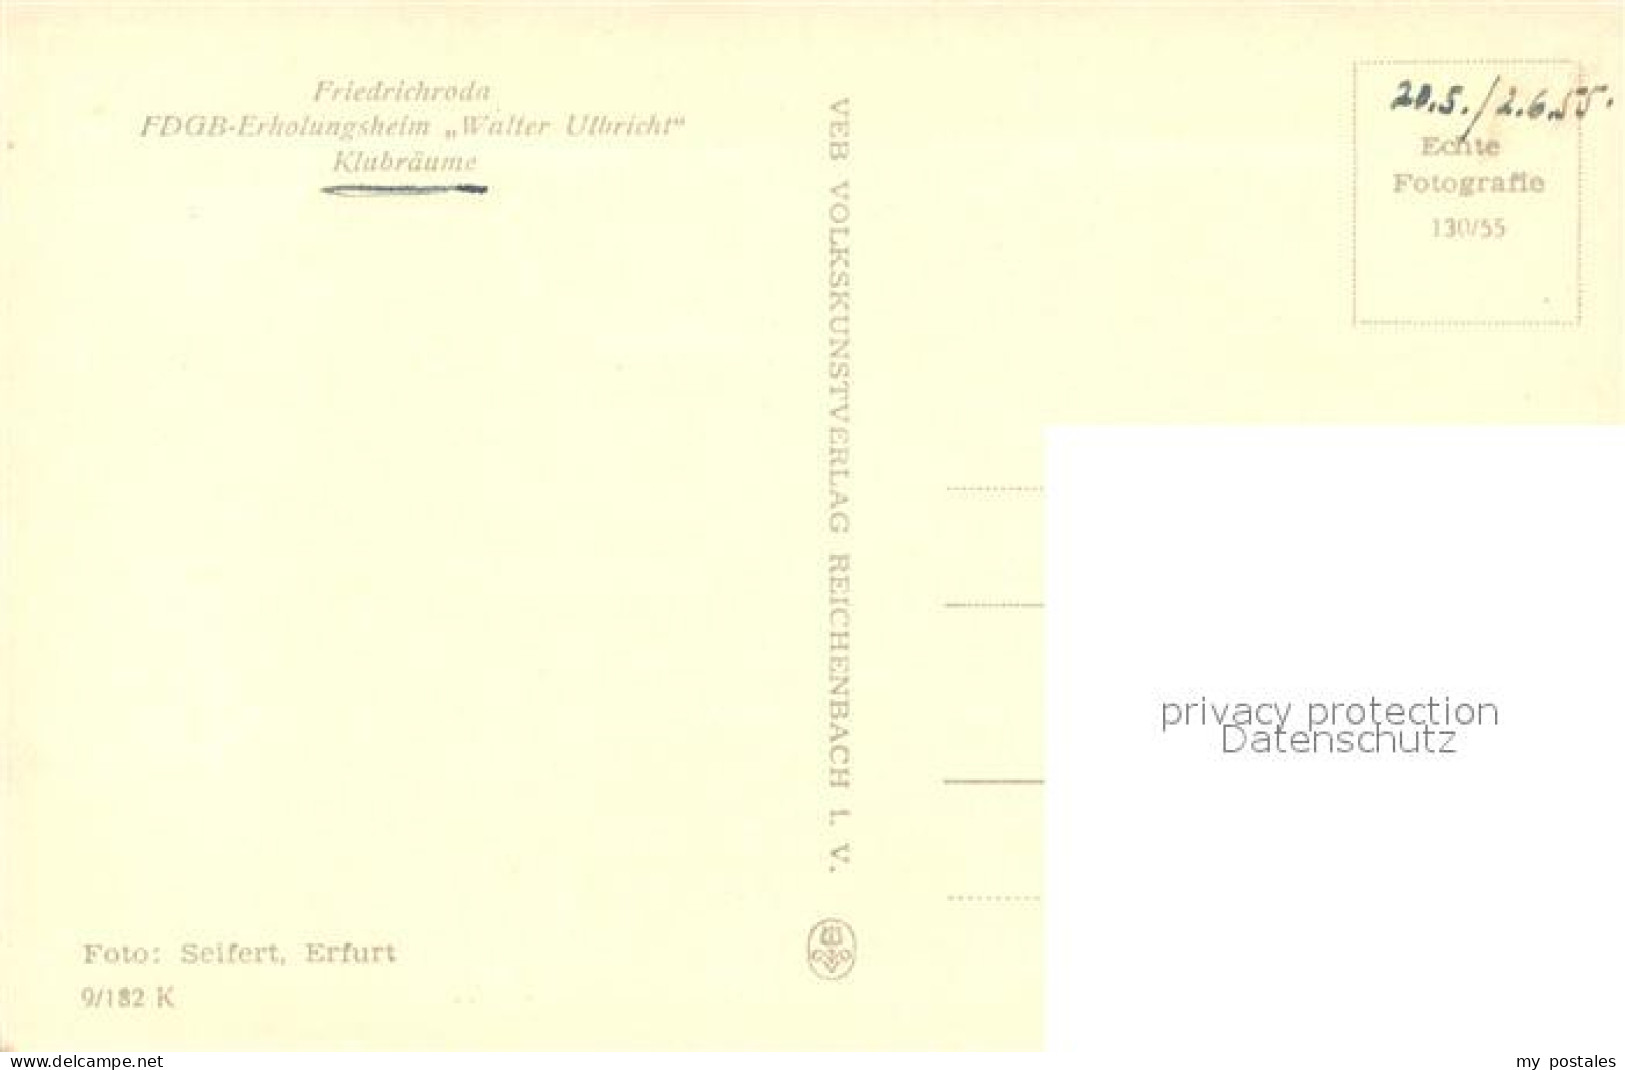 73612845 Friedrichroda FDGB Erholungsheim Walter Ulbricht Klubraeume Friedrichro - Friedrichroda